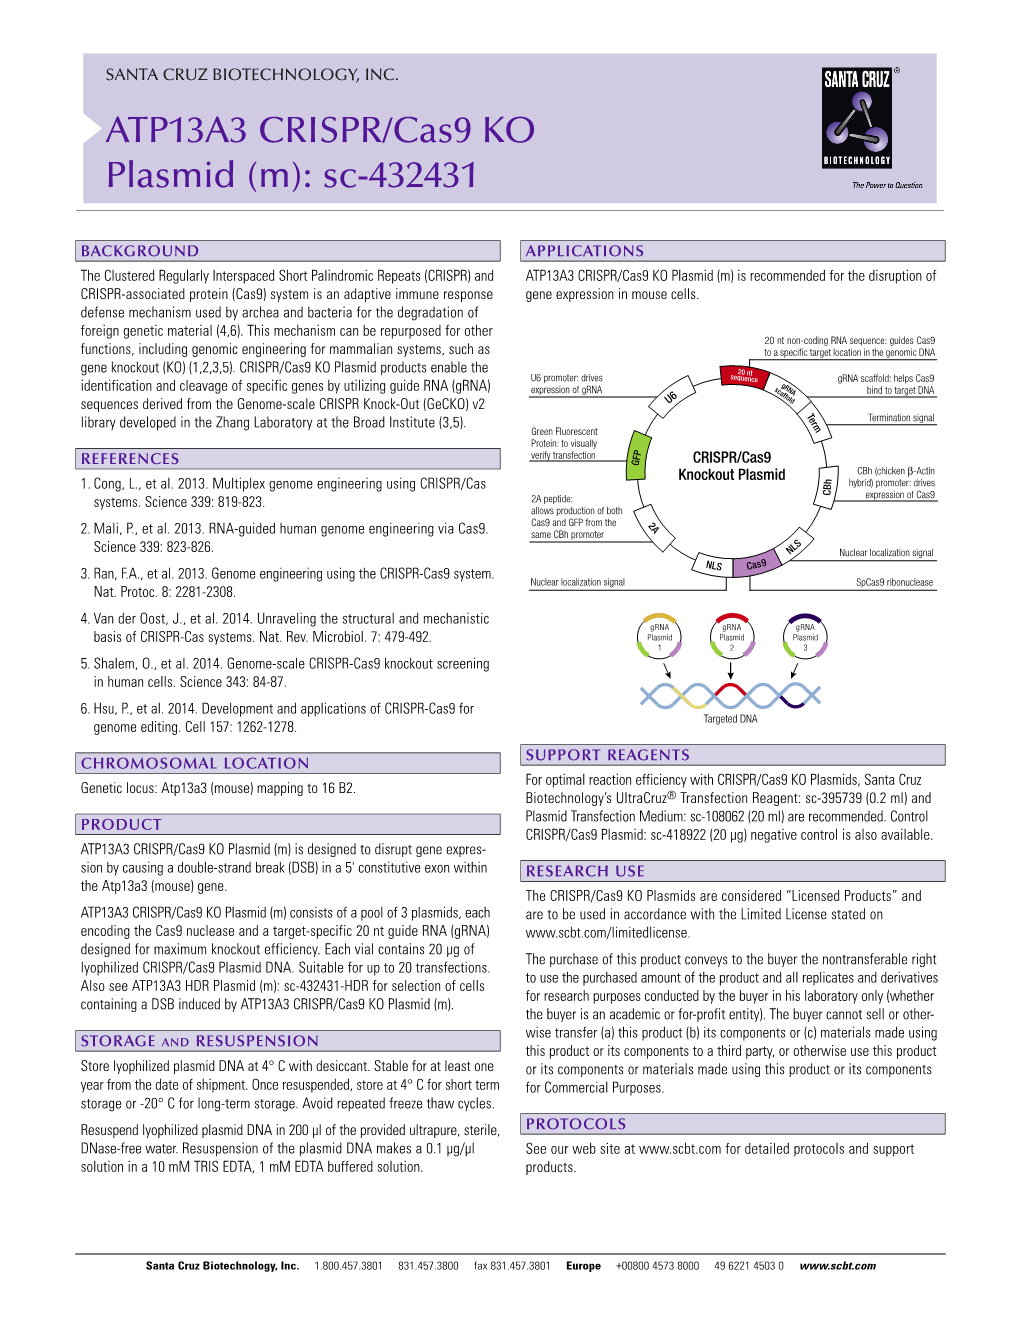 ATP13A3 CRISPR/Cas9 KO Plasmid (M): Sc-432431